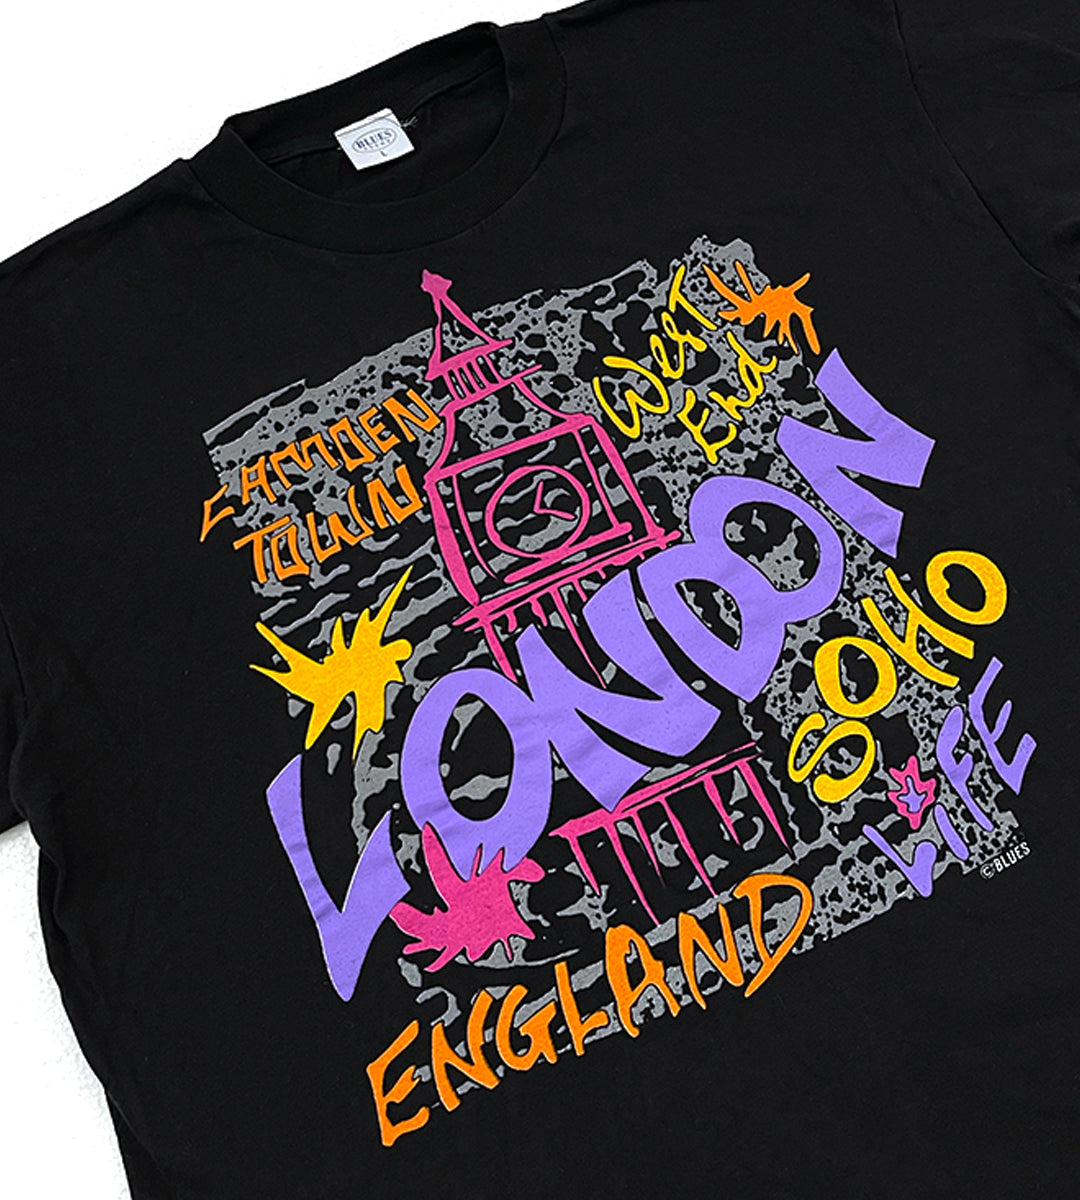 LONDON TOURIST T-SHIRT